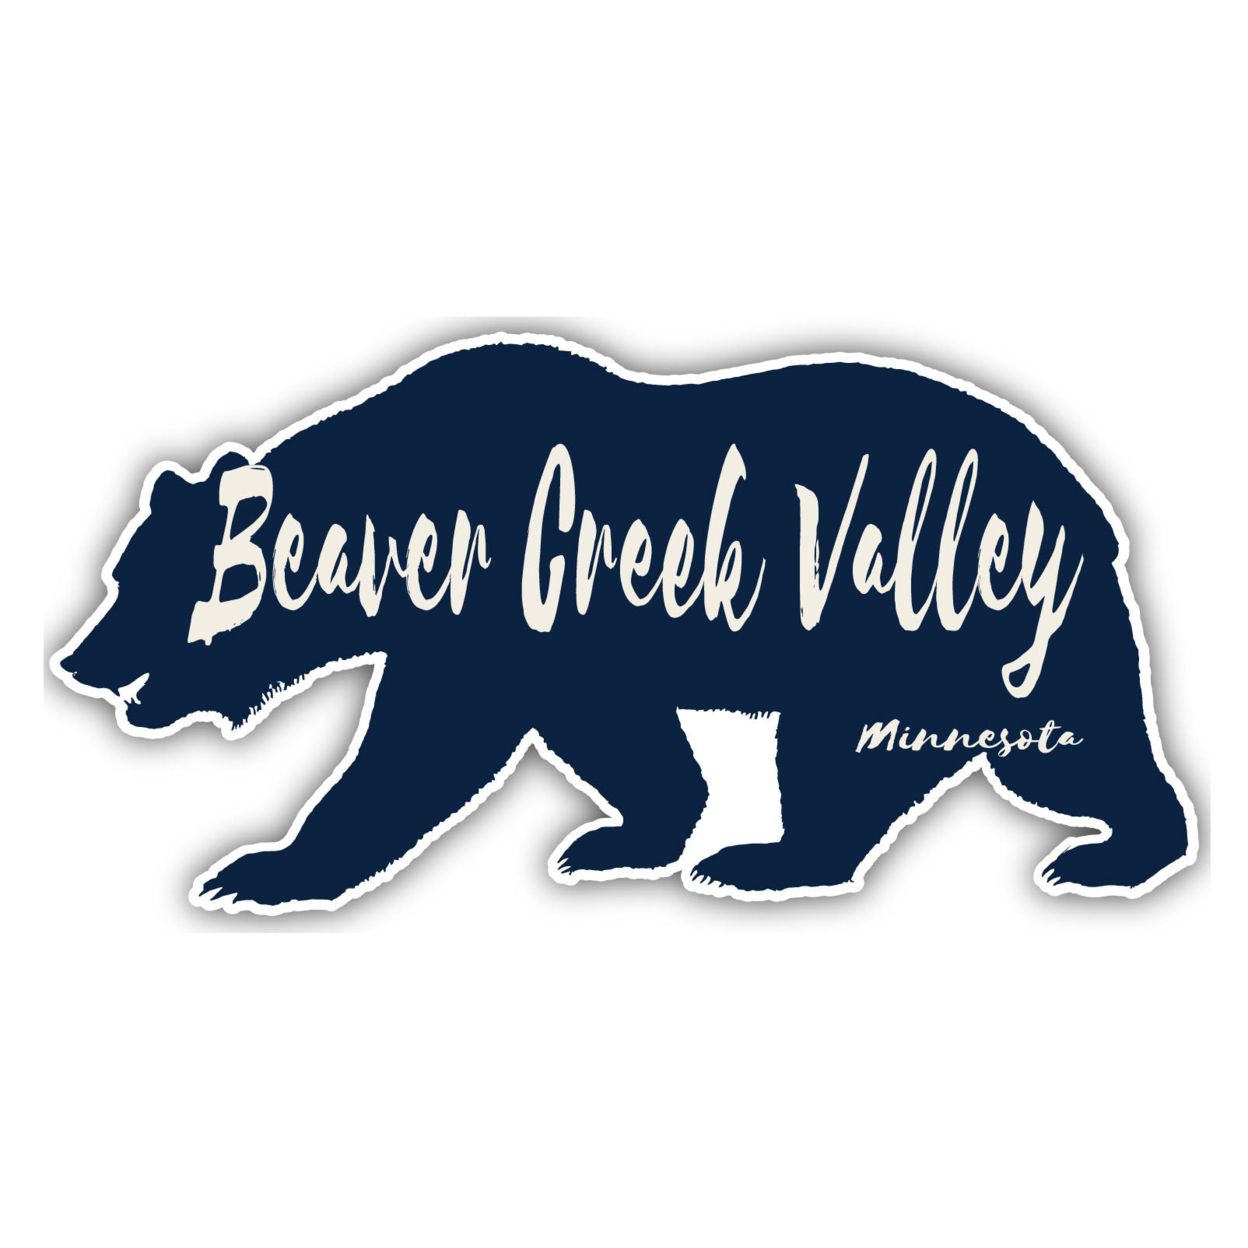 Beaver Creek Valley Minnesota Souvenir Decorative Stickers (Choose Theme And Size) - Single Unit, 8-Inch, Bear